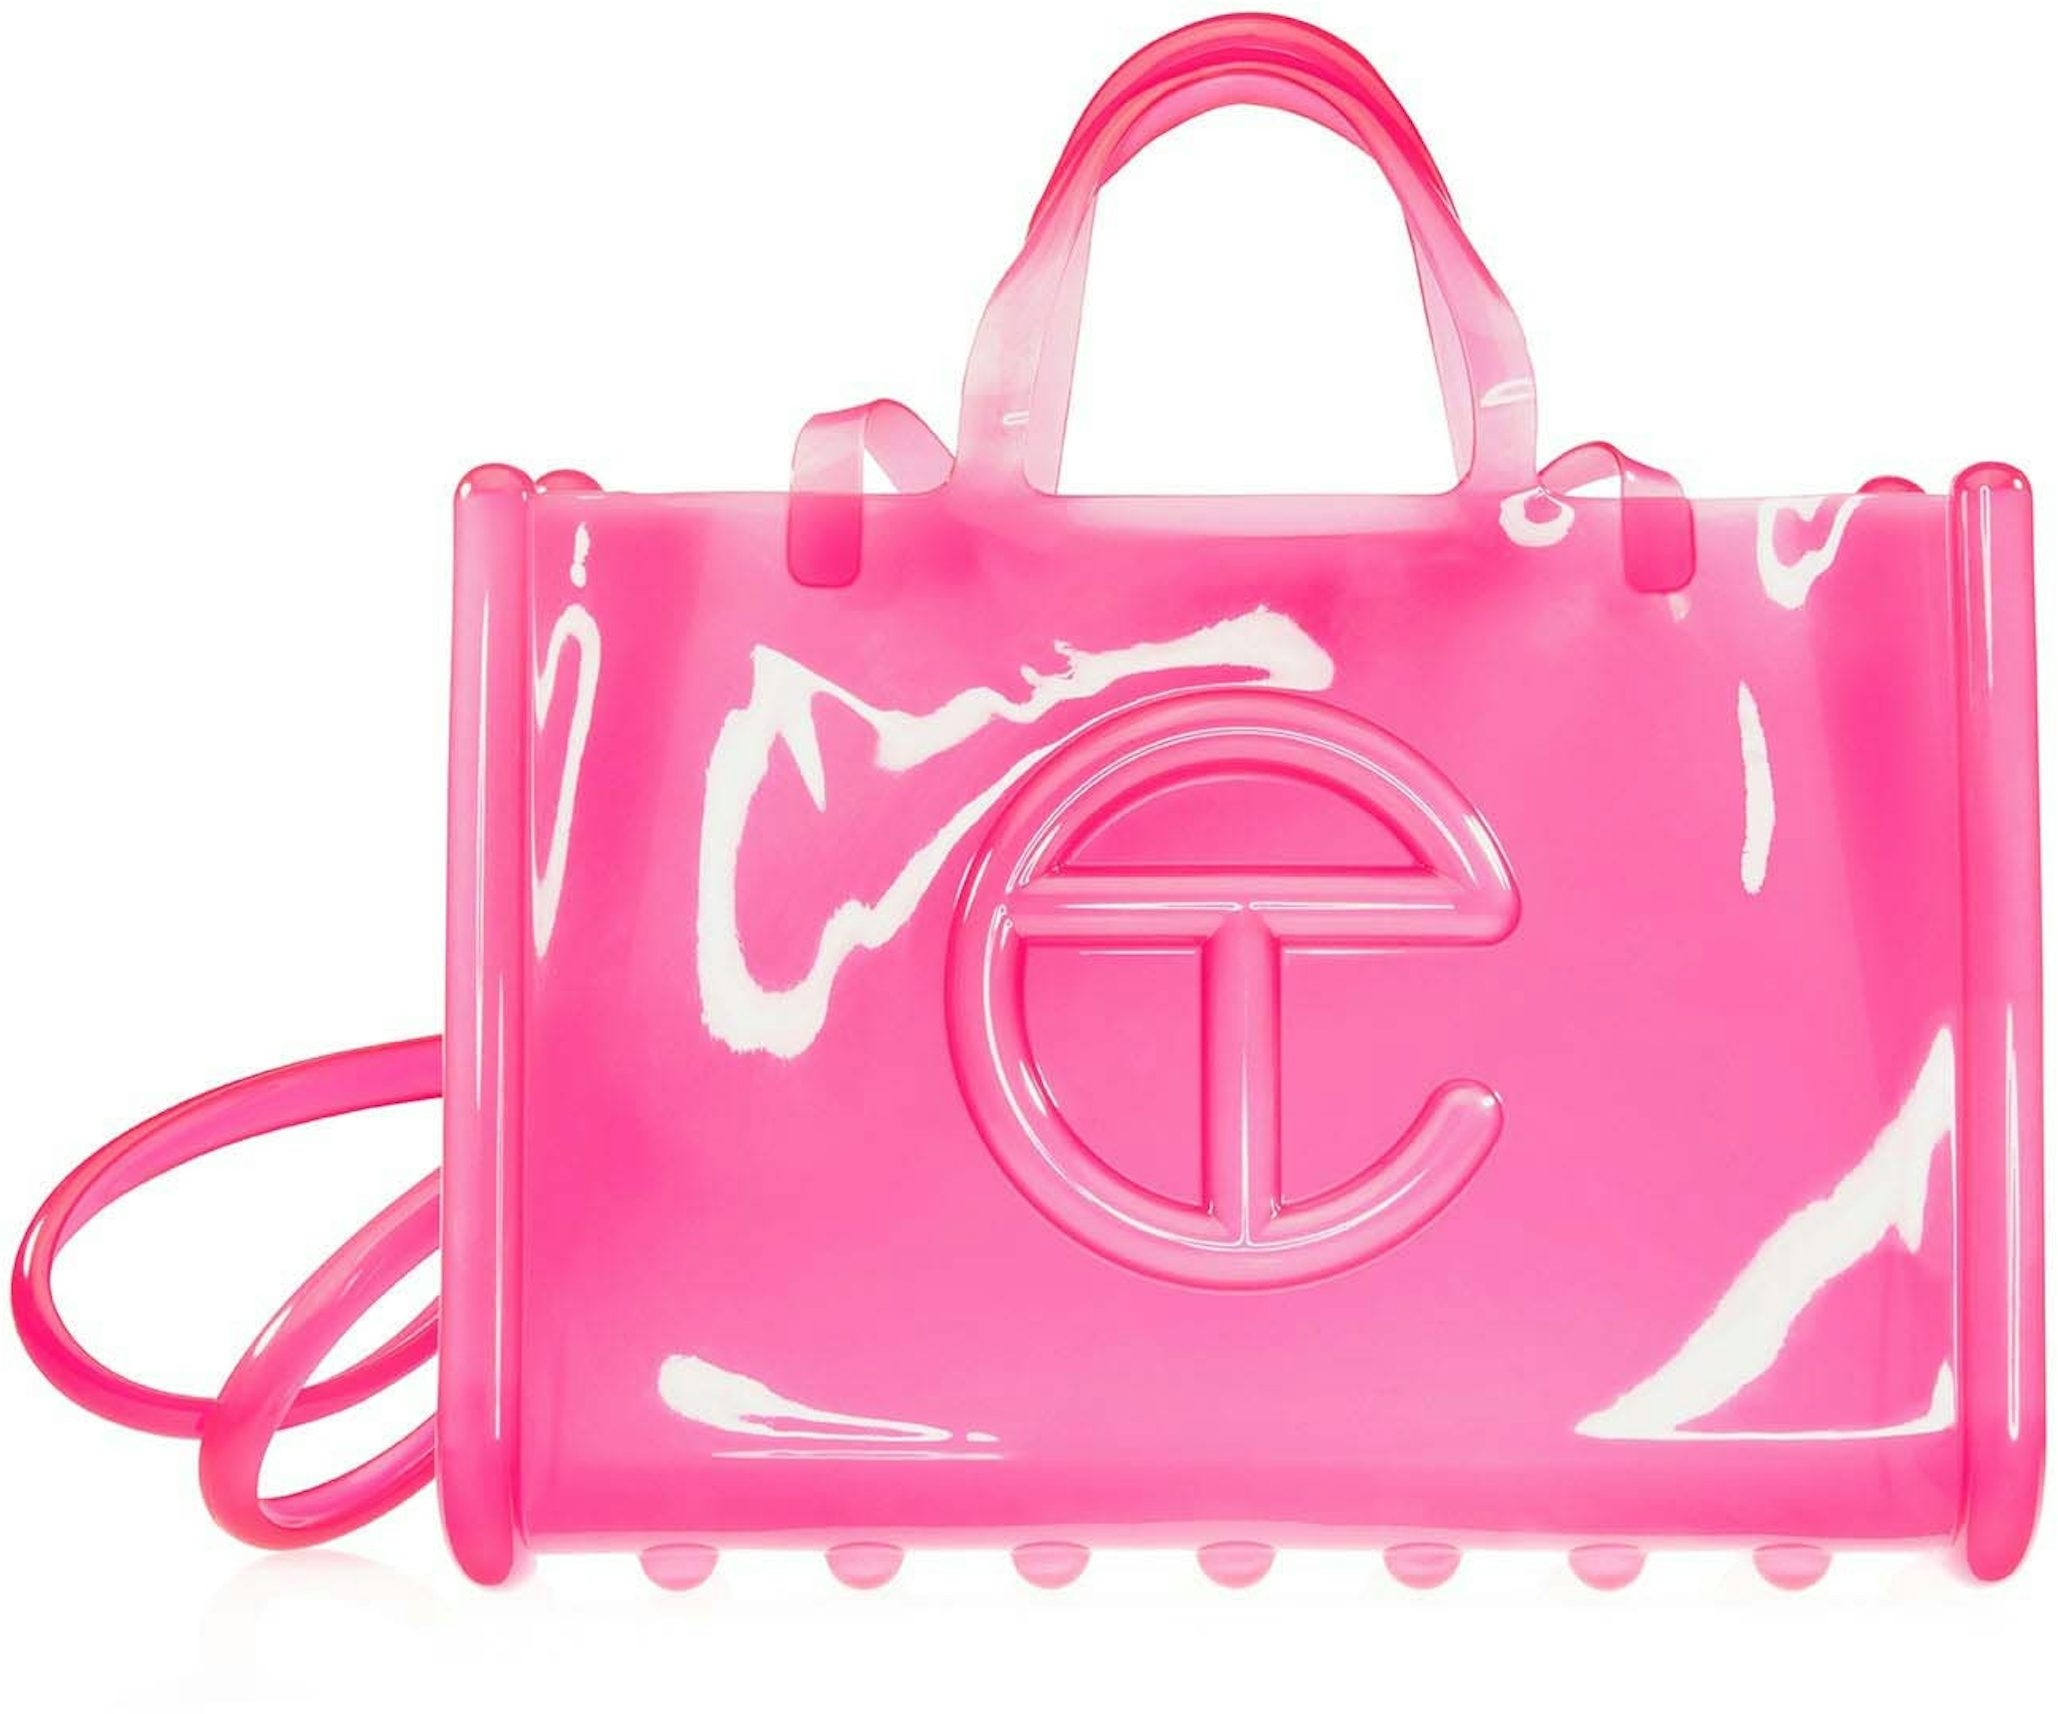 Telfar x Melissa Large Jelly Shopper Clear Pink in PVC - US